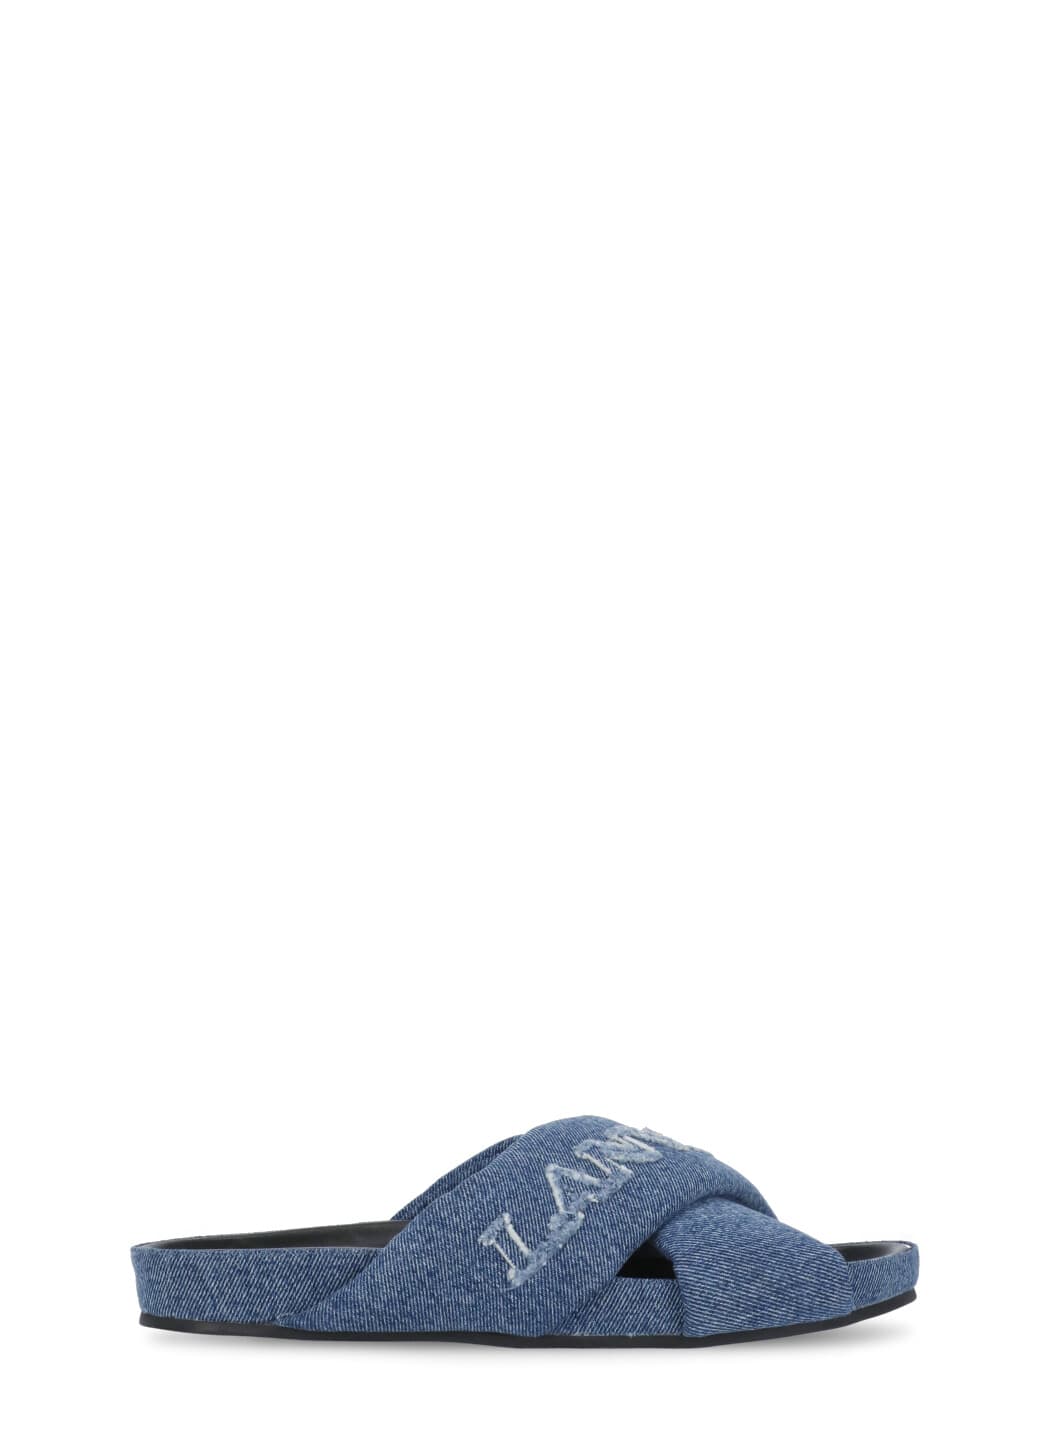 Lanvin Slipper With Logo In Blue